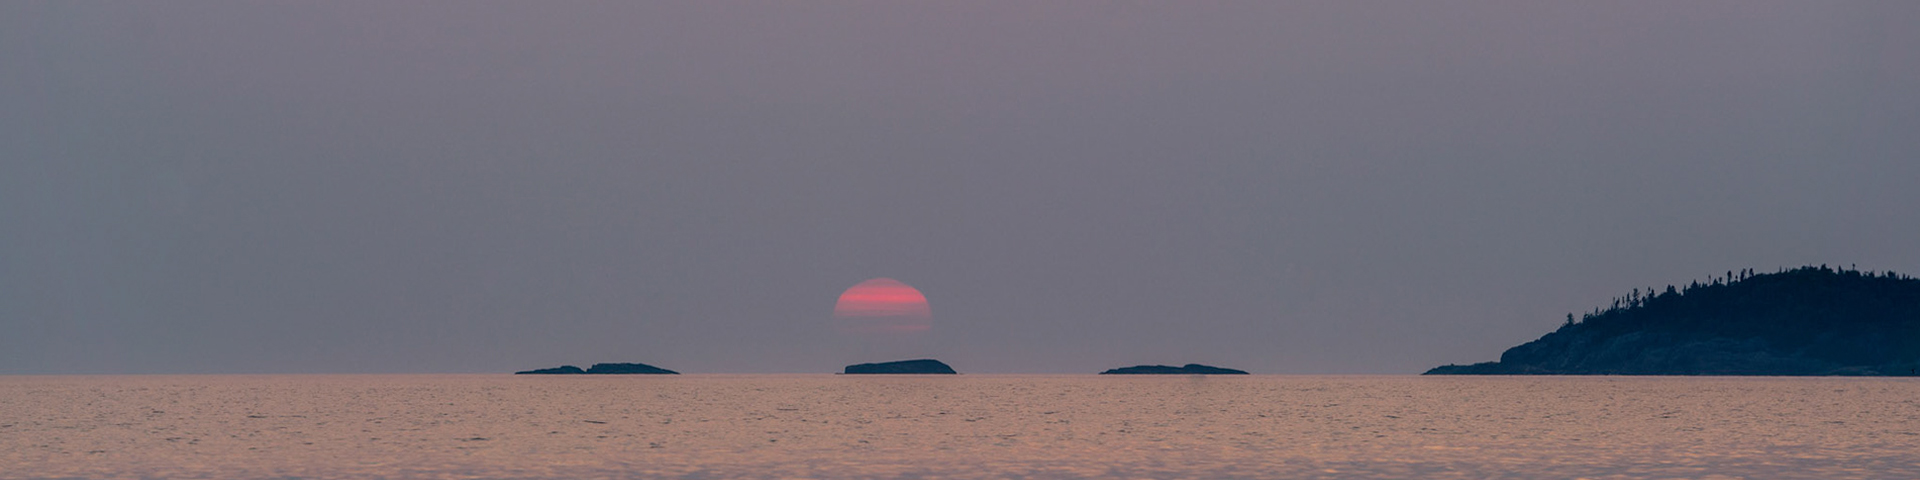 The sun setting over 3 islands.